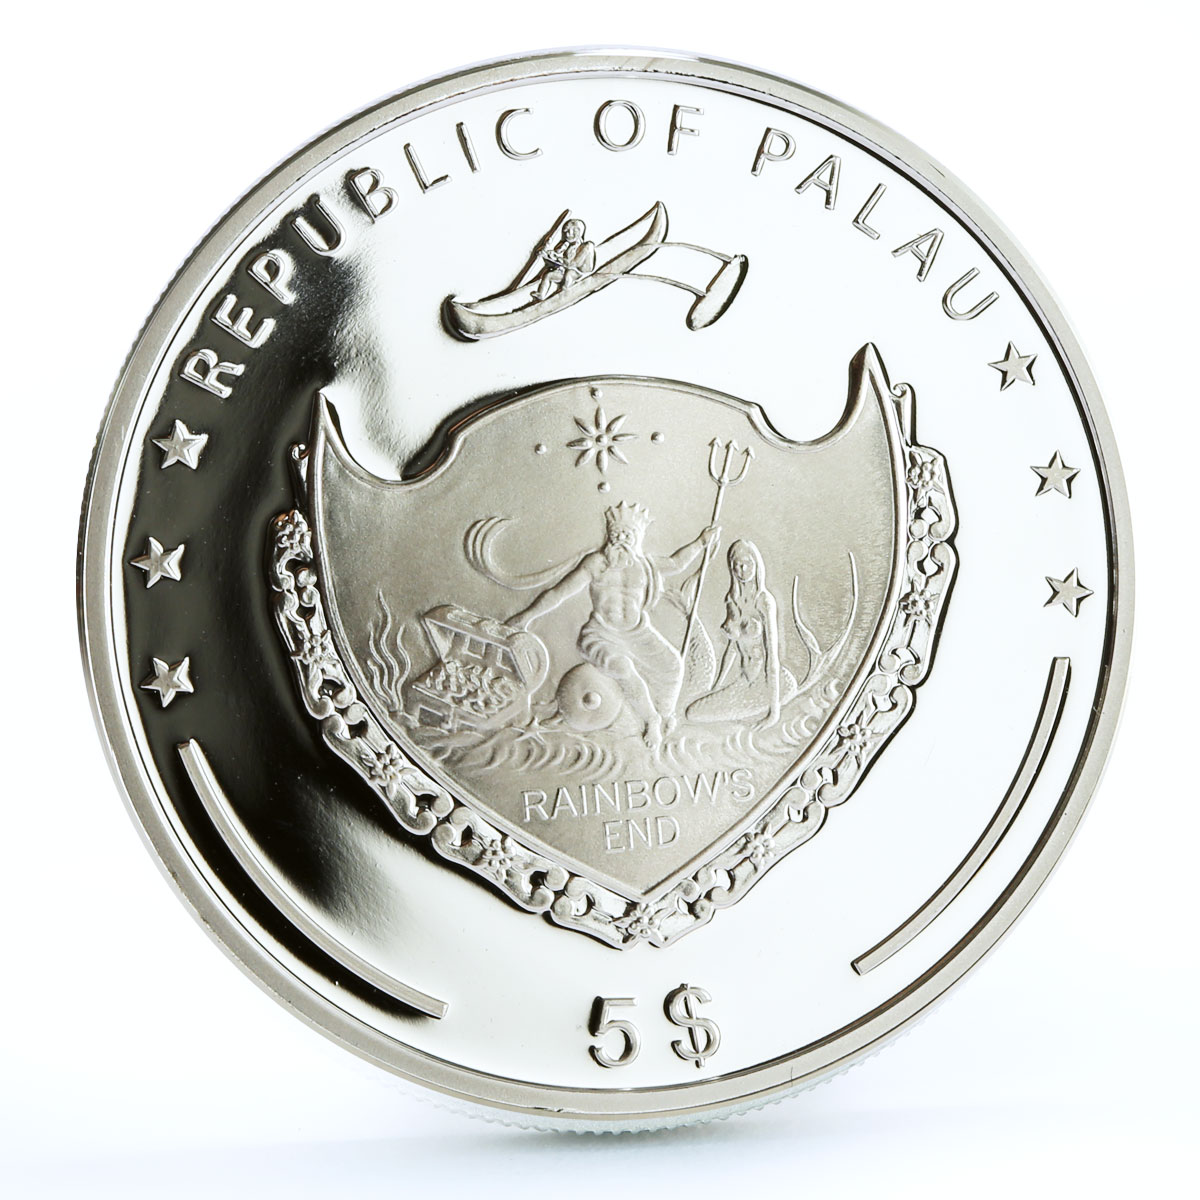 Palau 5 dollars Marine Life Protection Pinctada Maxima Shell silver coin 2007